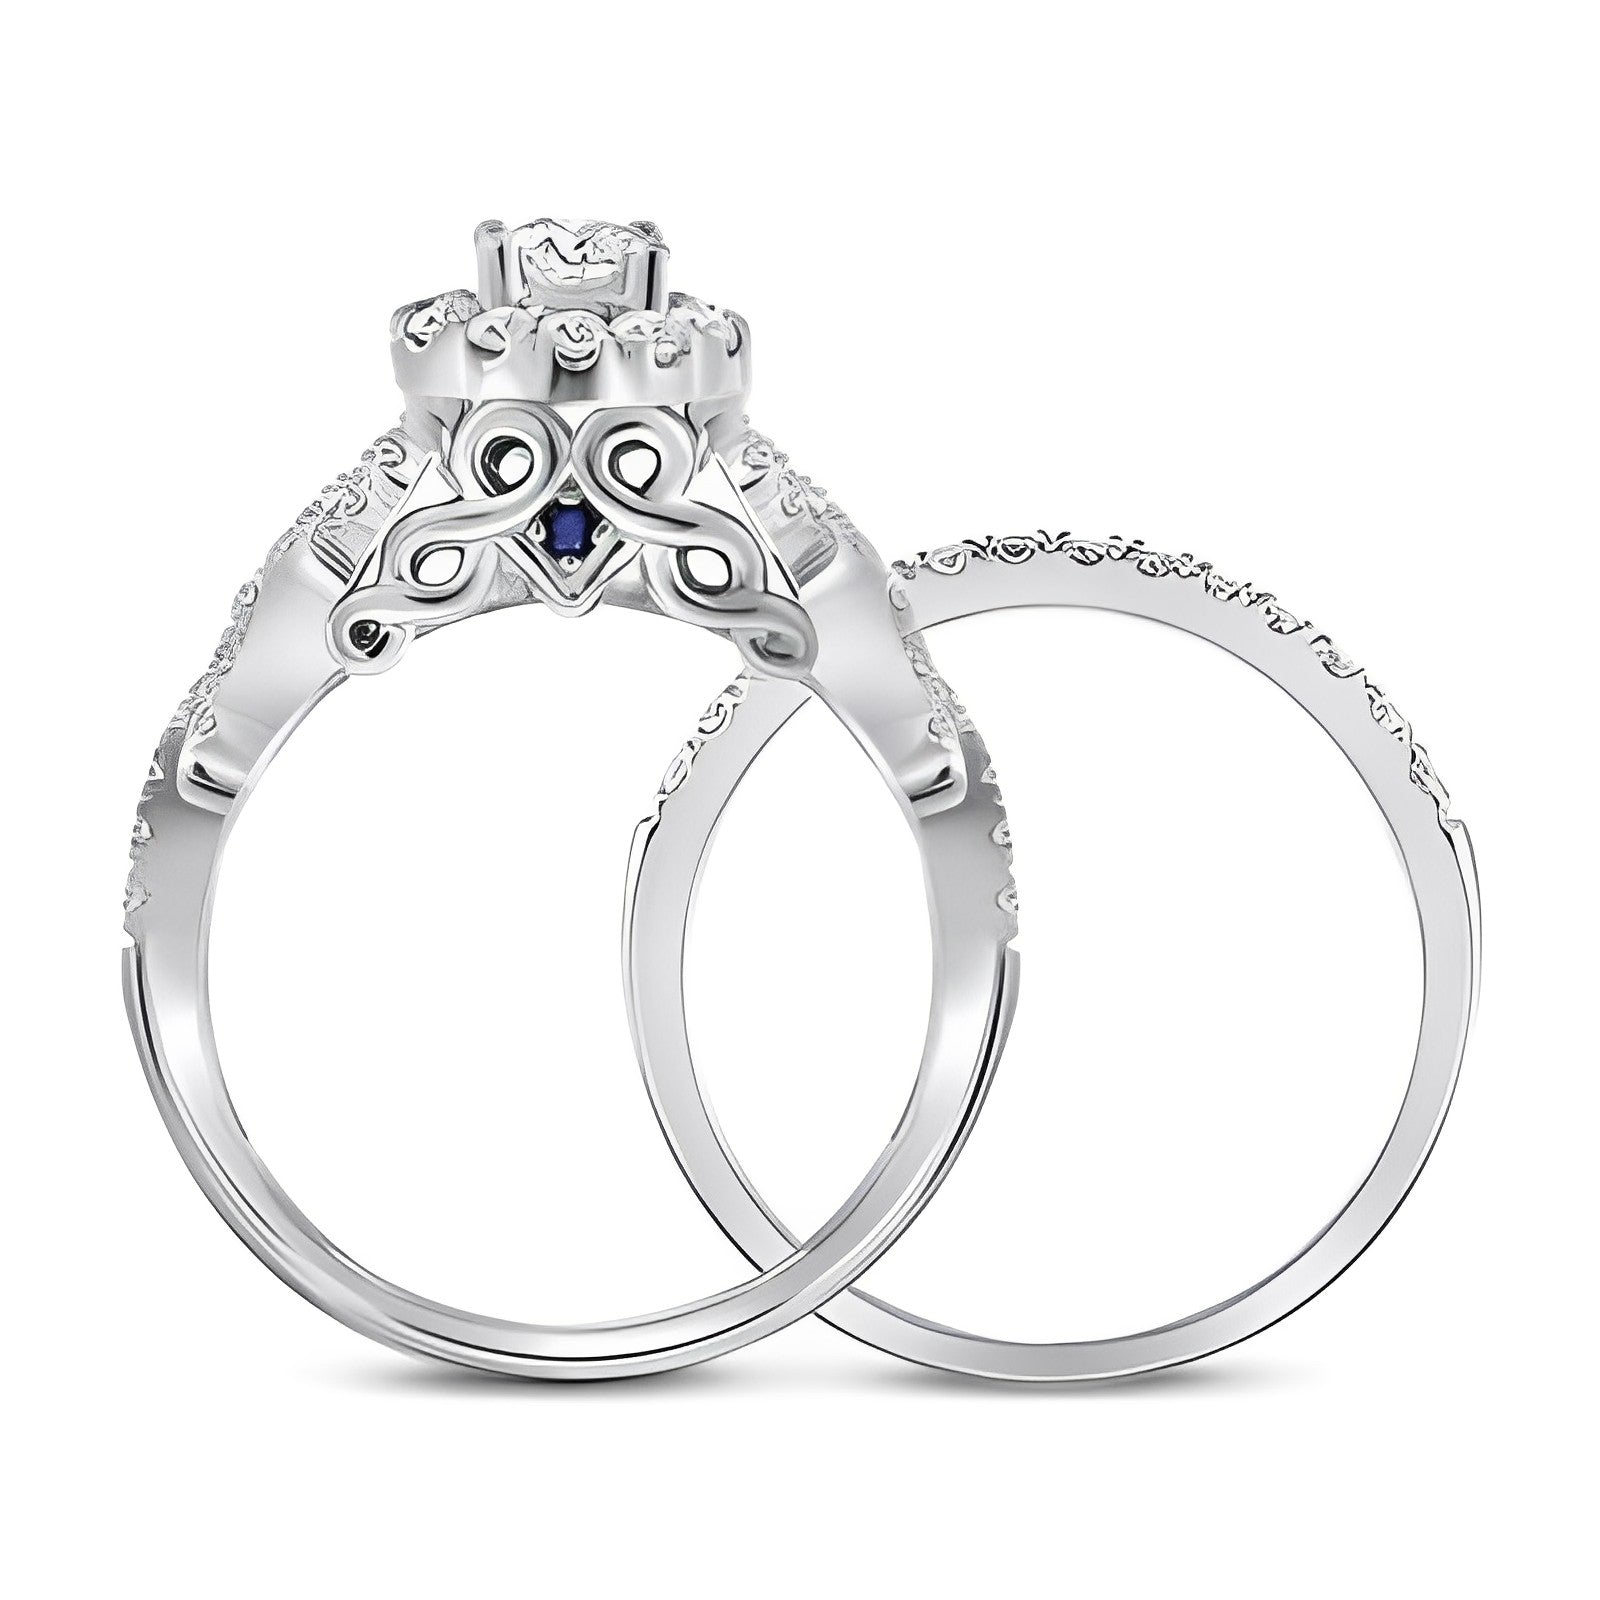 14K TWO-TONE GOLD ROUND DIAMOND BRIDAL WEDDING RING SET 1 CTTW (CERTIFIED)